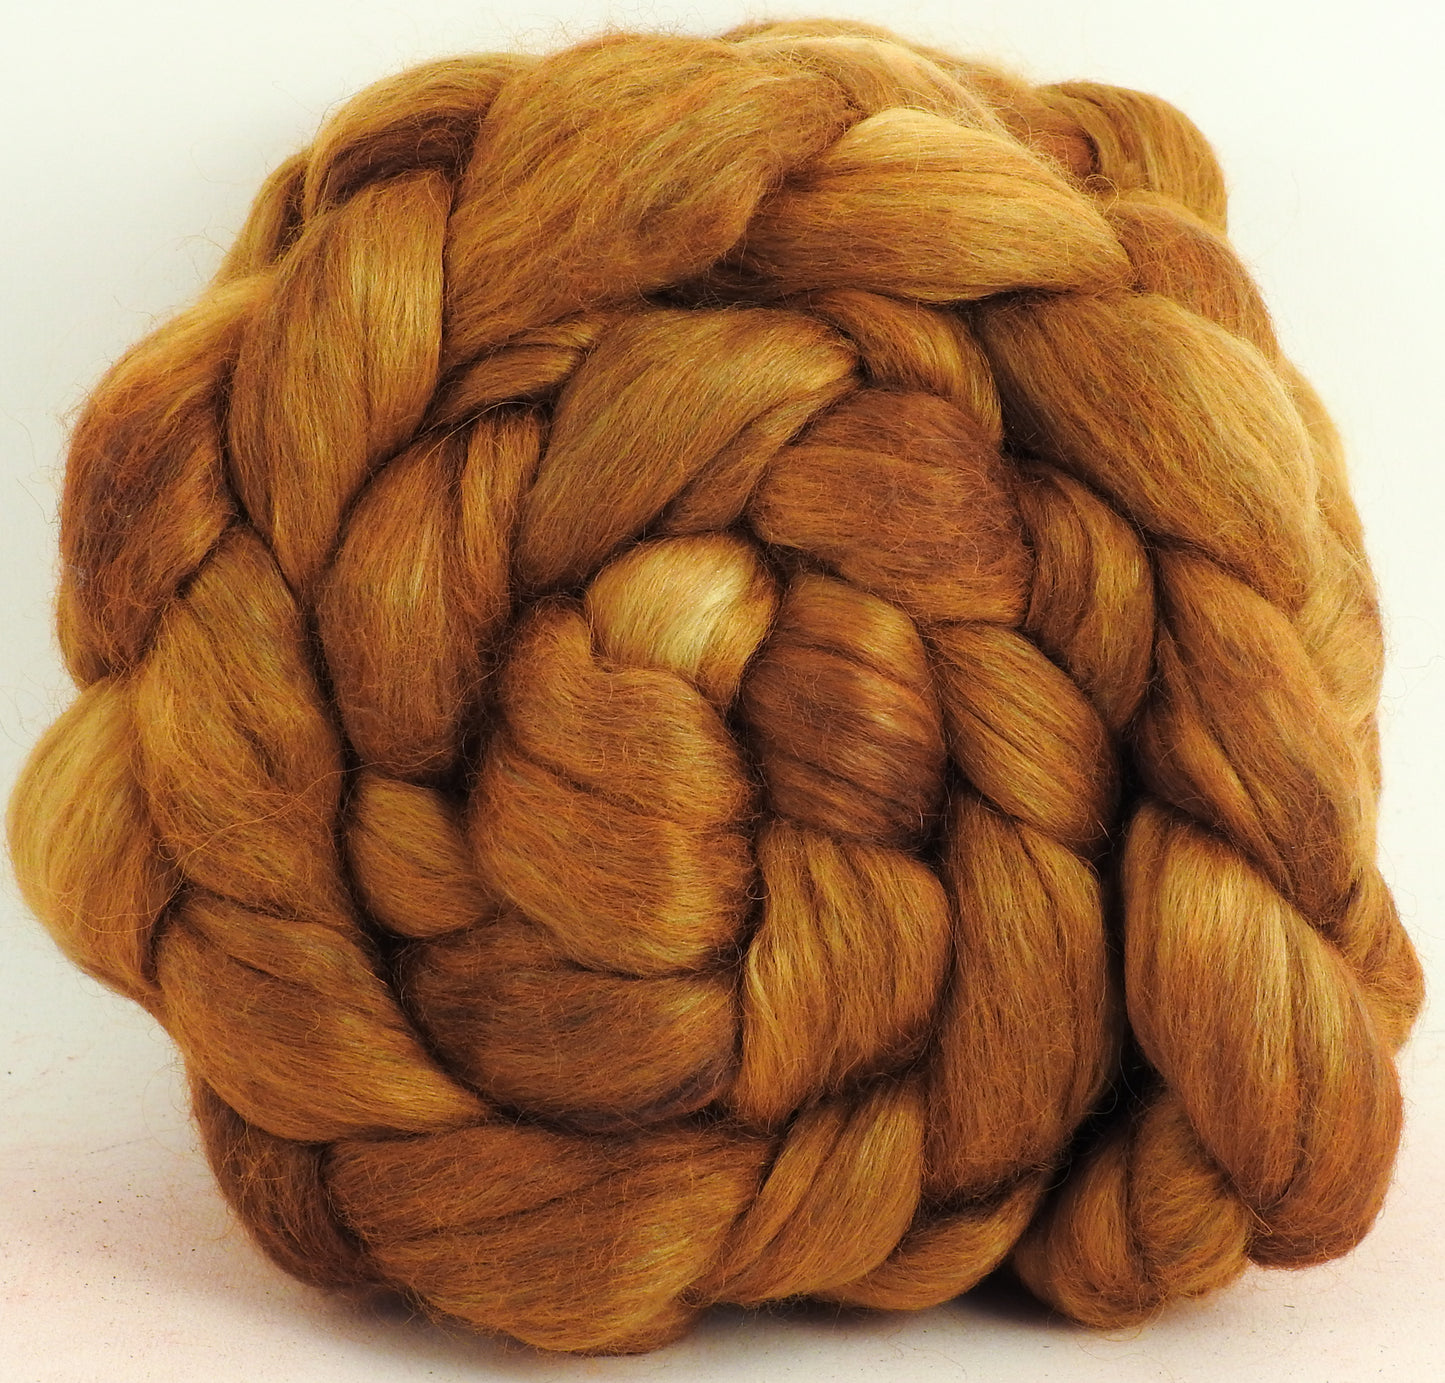 Butterscotch - Batt in a Braid #52- Wensleydale/ Mulberry silk/ Polwarth (60/25/15)